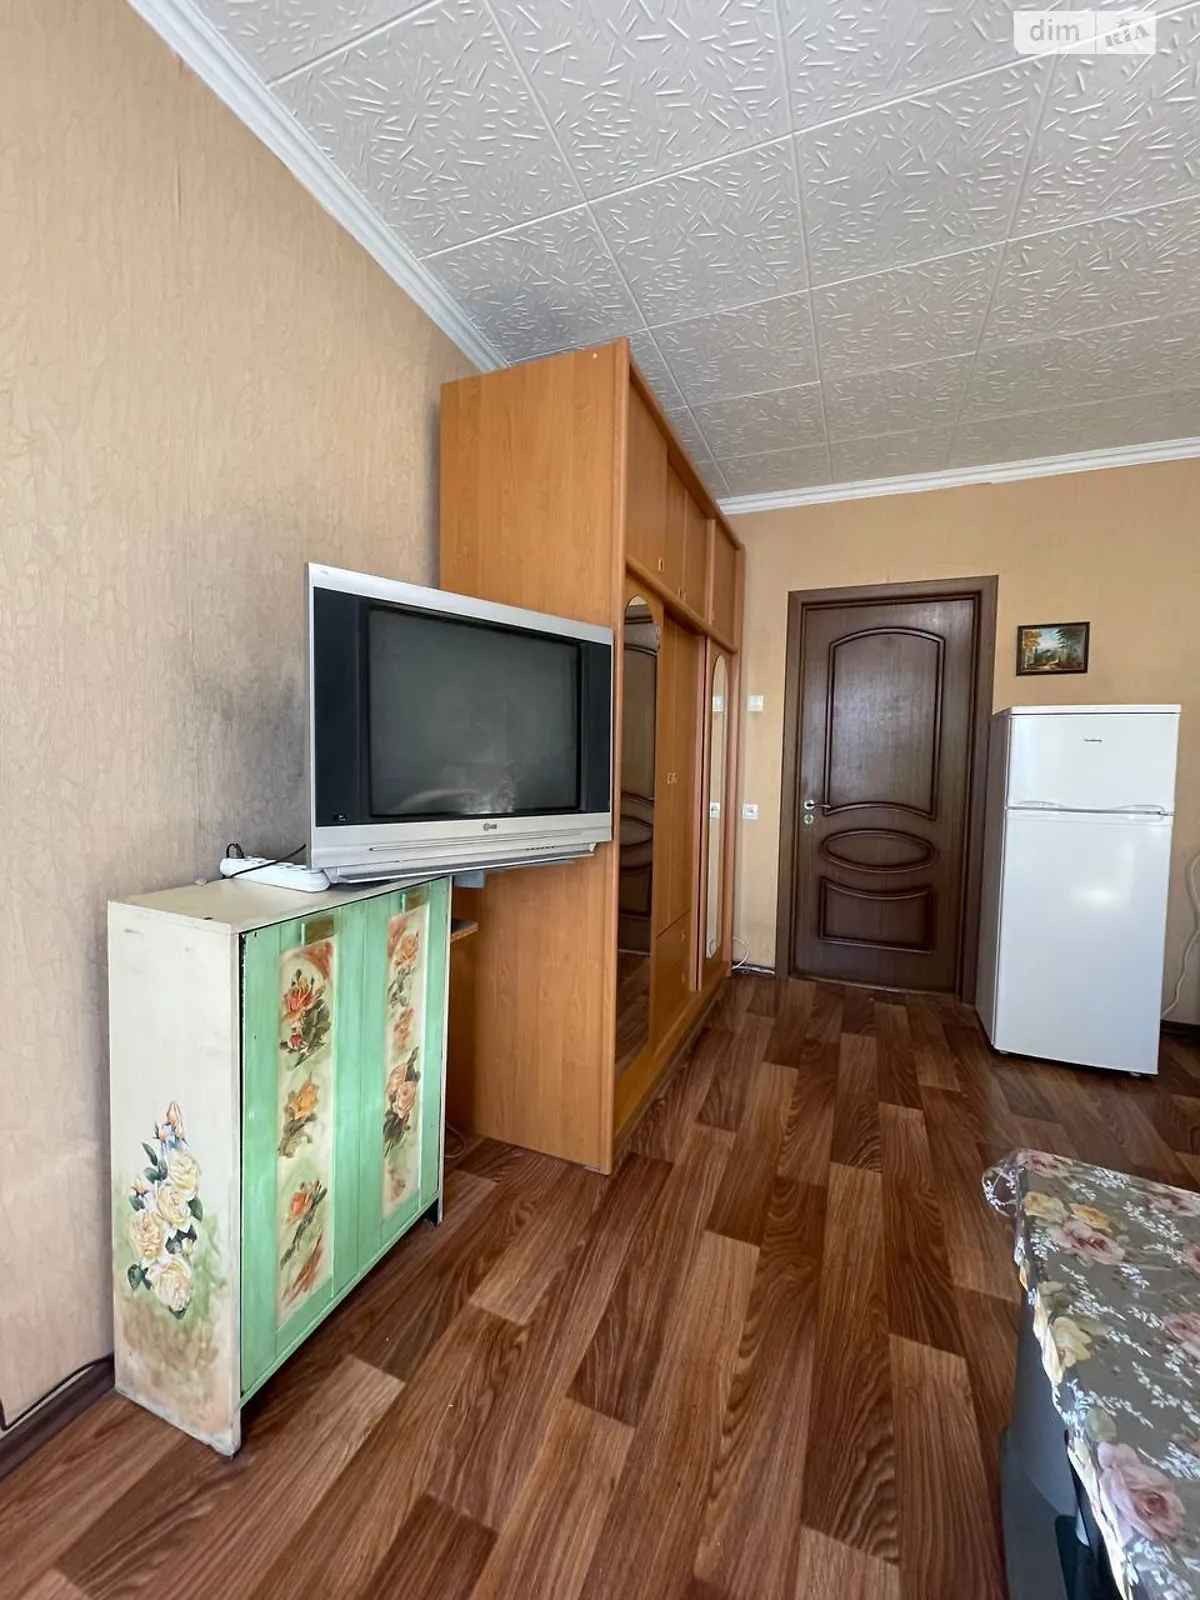 Продается комната 28 кв. м в Одессе, цена: 8500 $ - фото 1